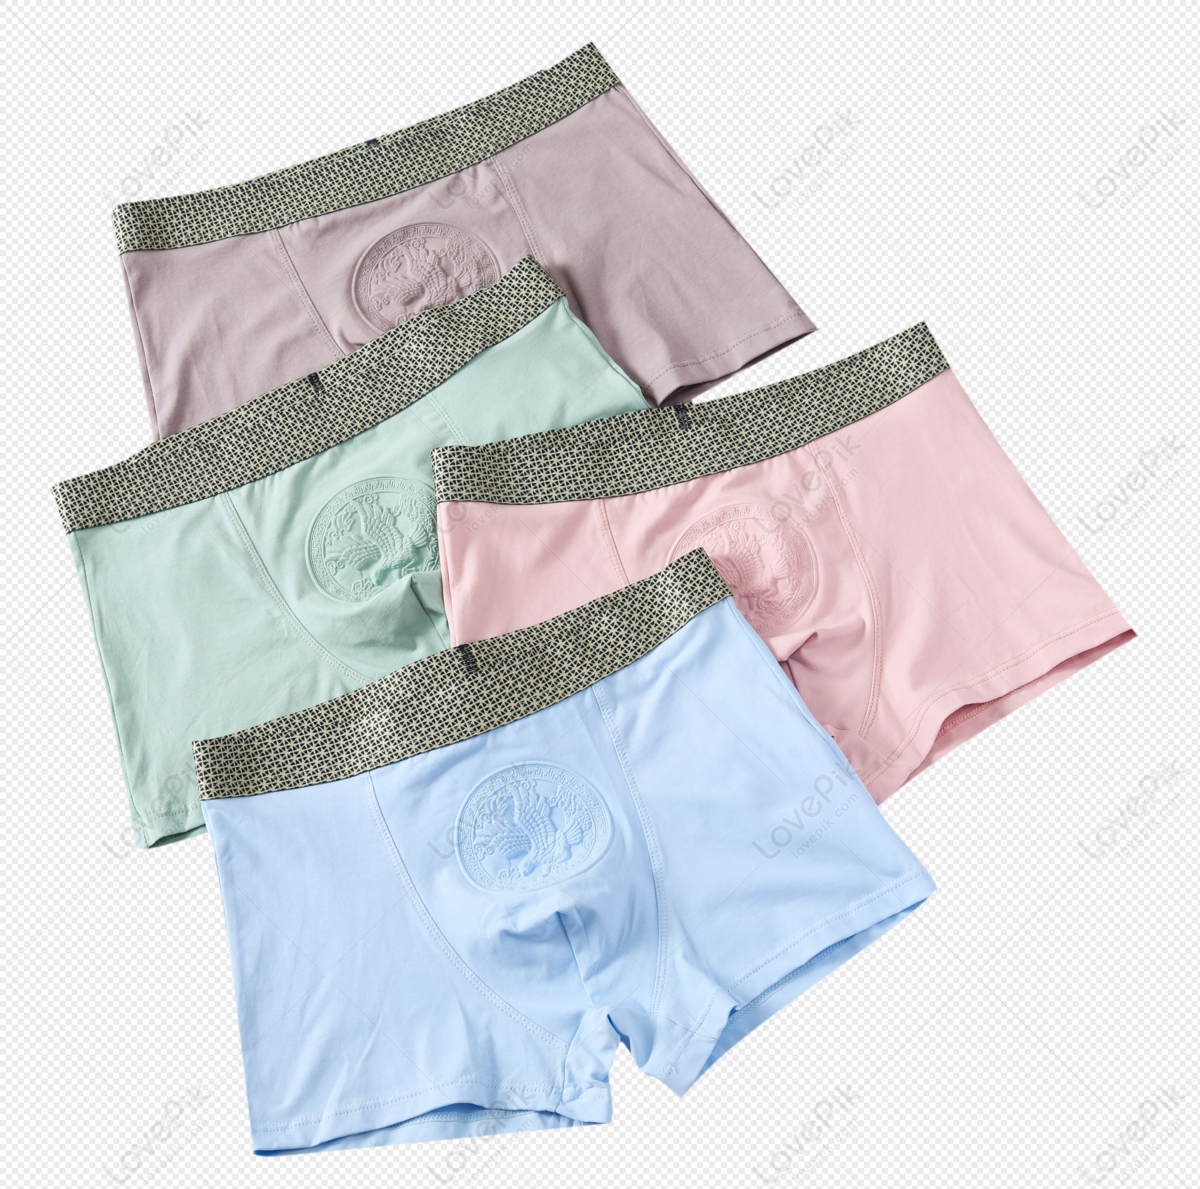 Mens Underwear, Men Underwear, Panties Men, Flat PNG Image Free Download  And Clipart Image For Free Download - Lovepik